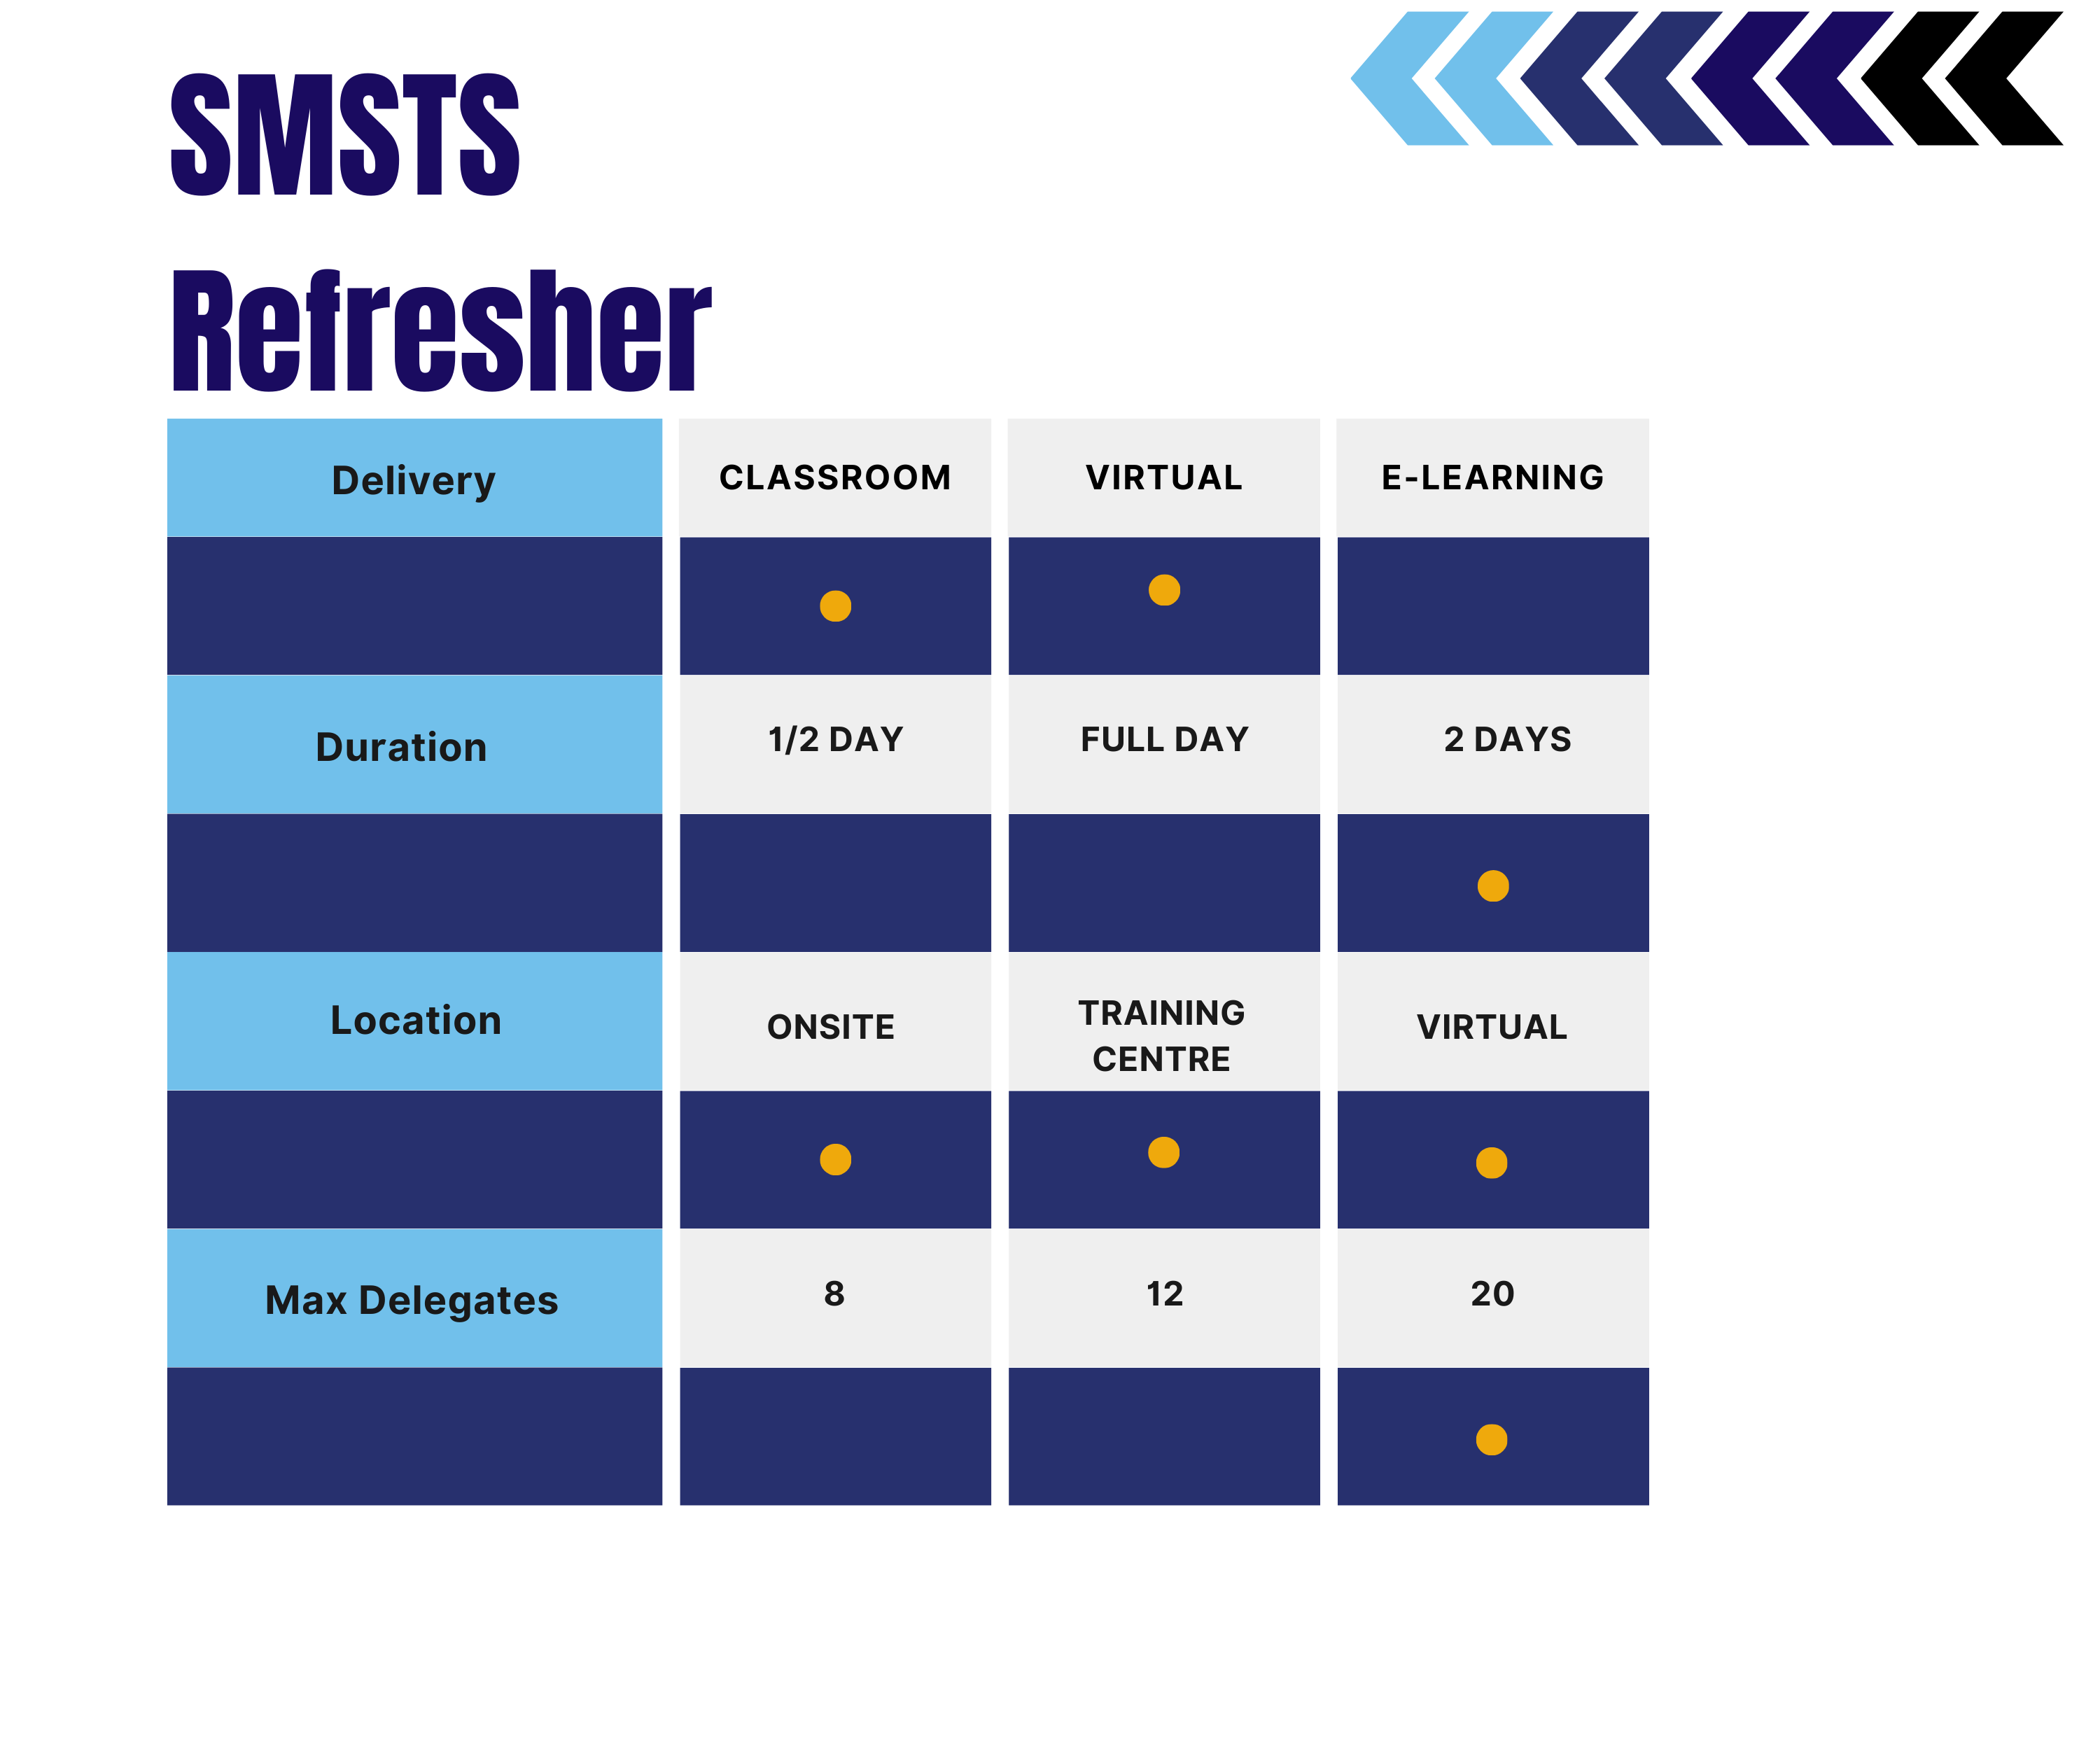 SMSTS Refresher